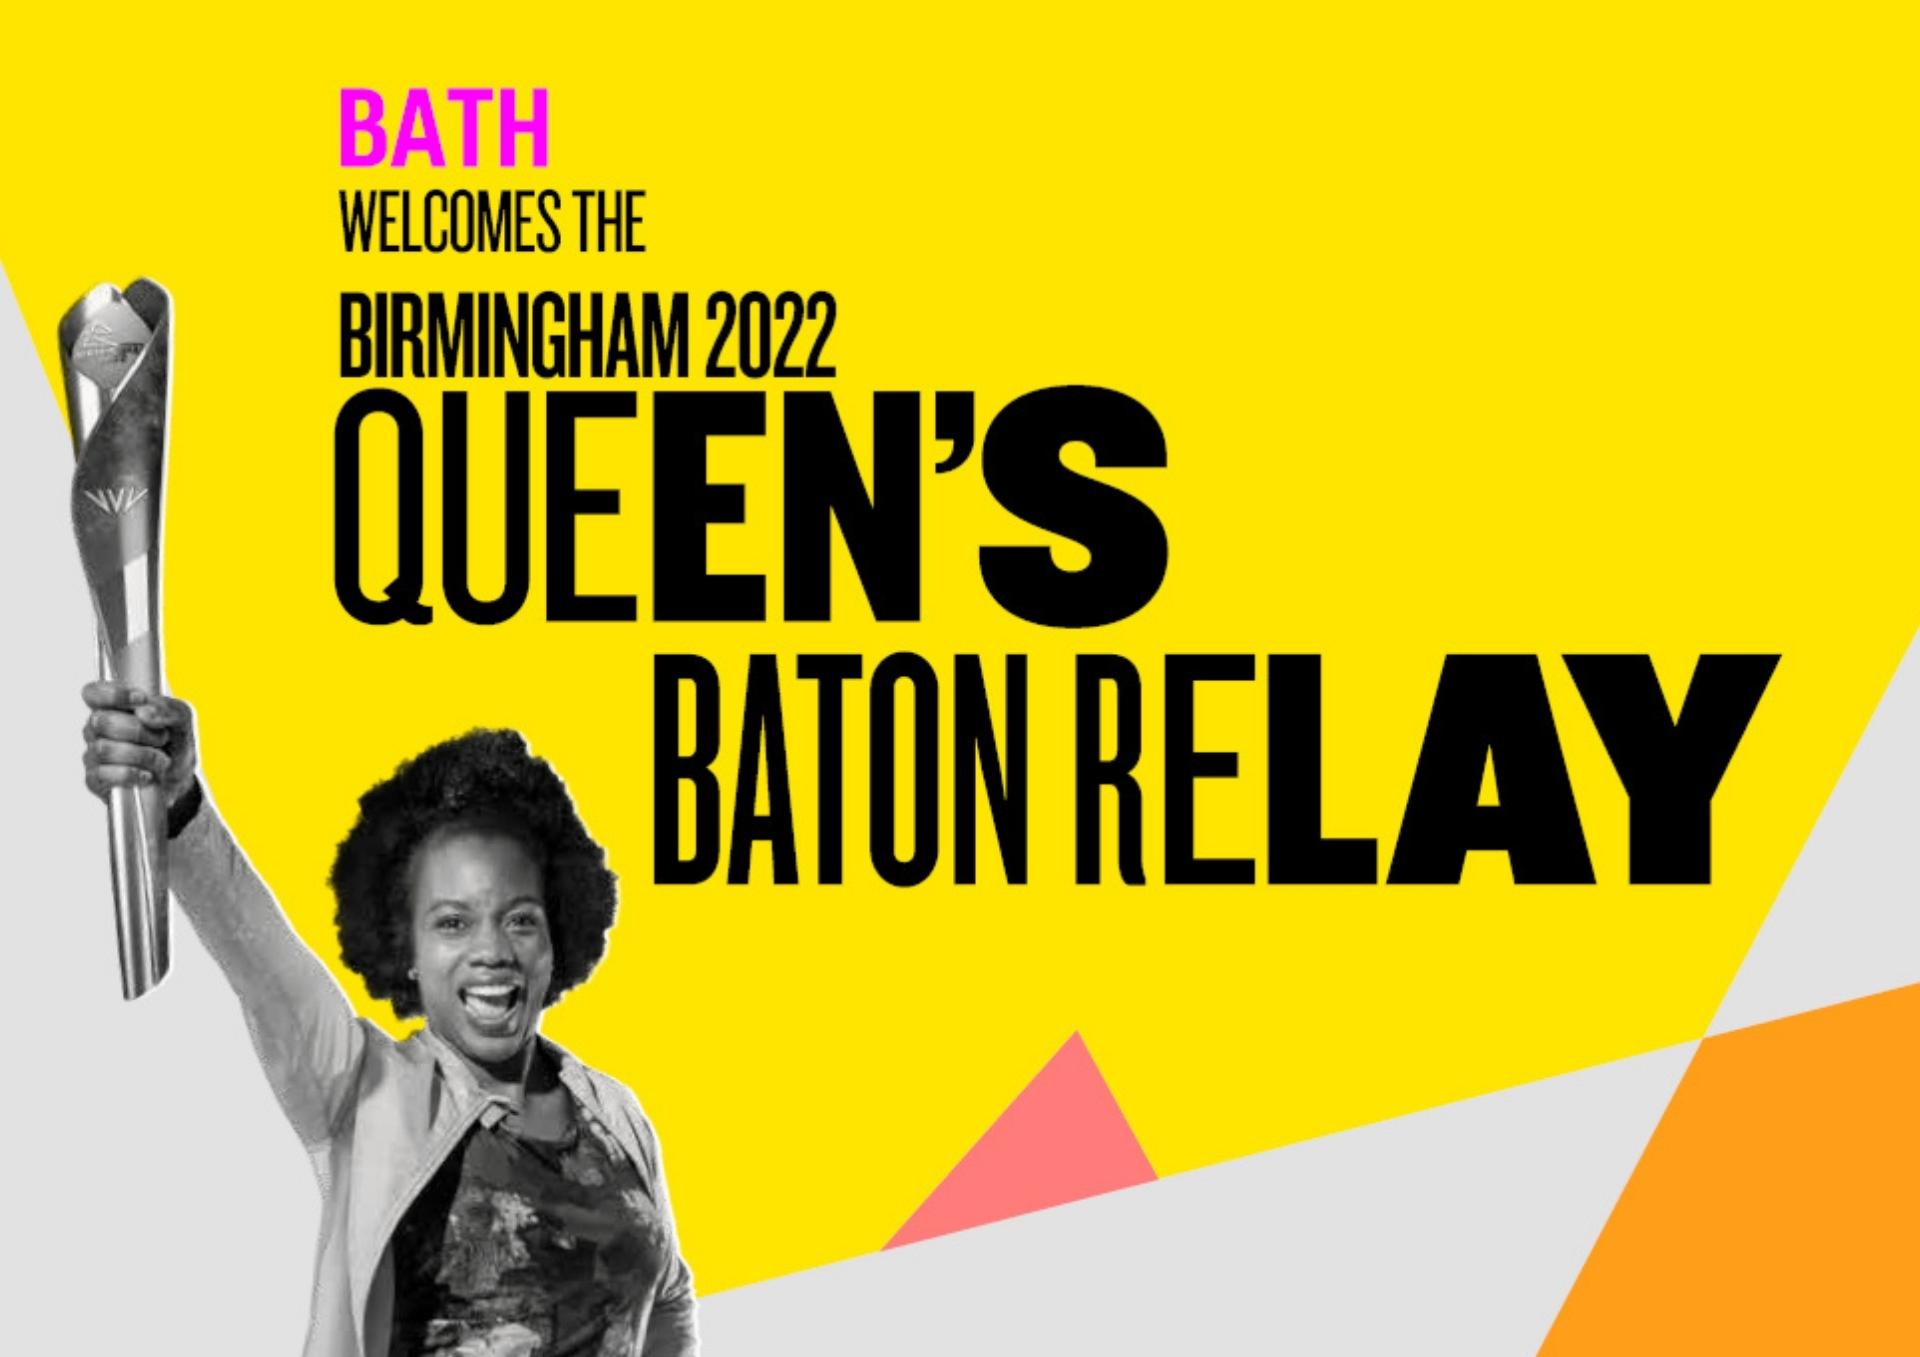 Queen's Baton Relay to visit Bath